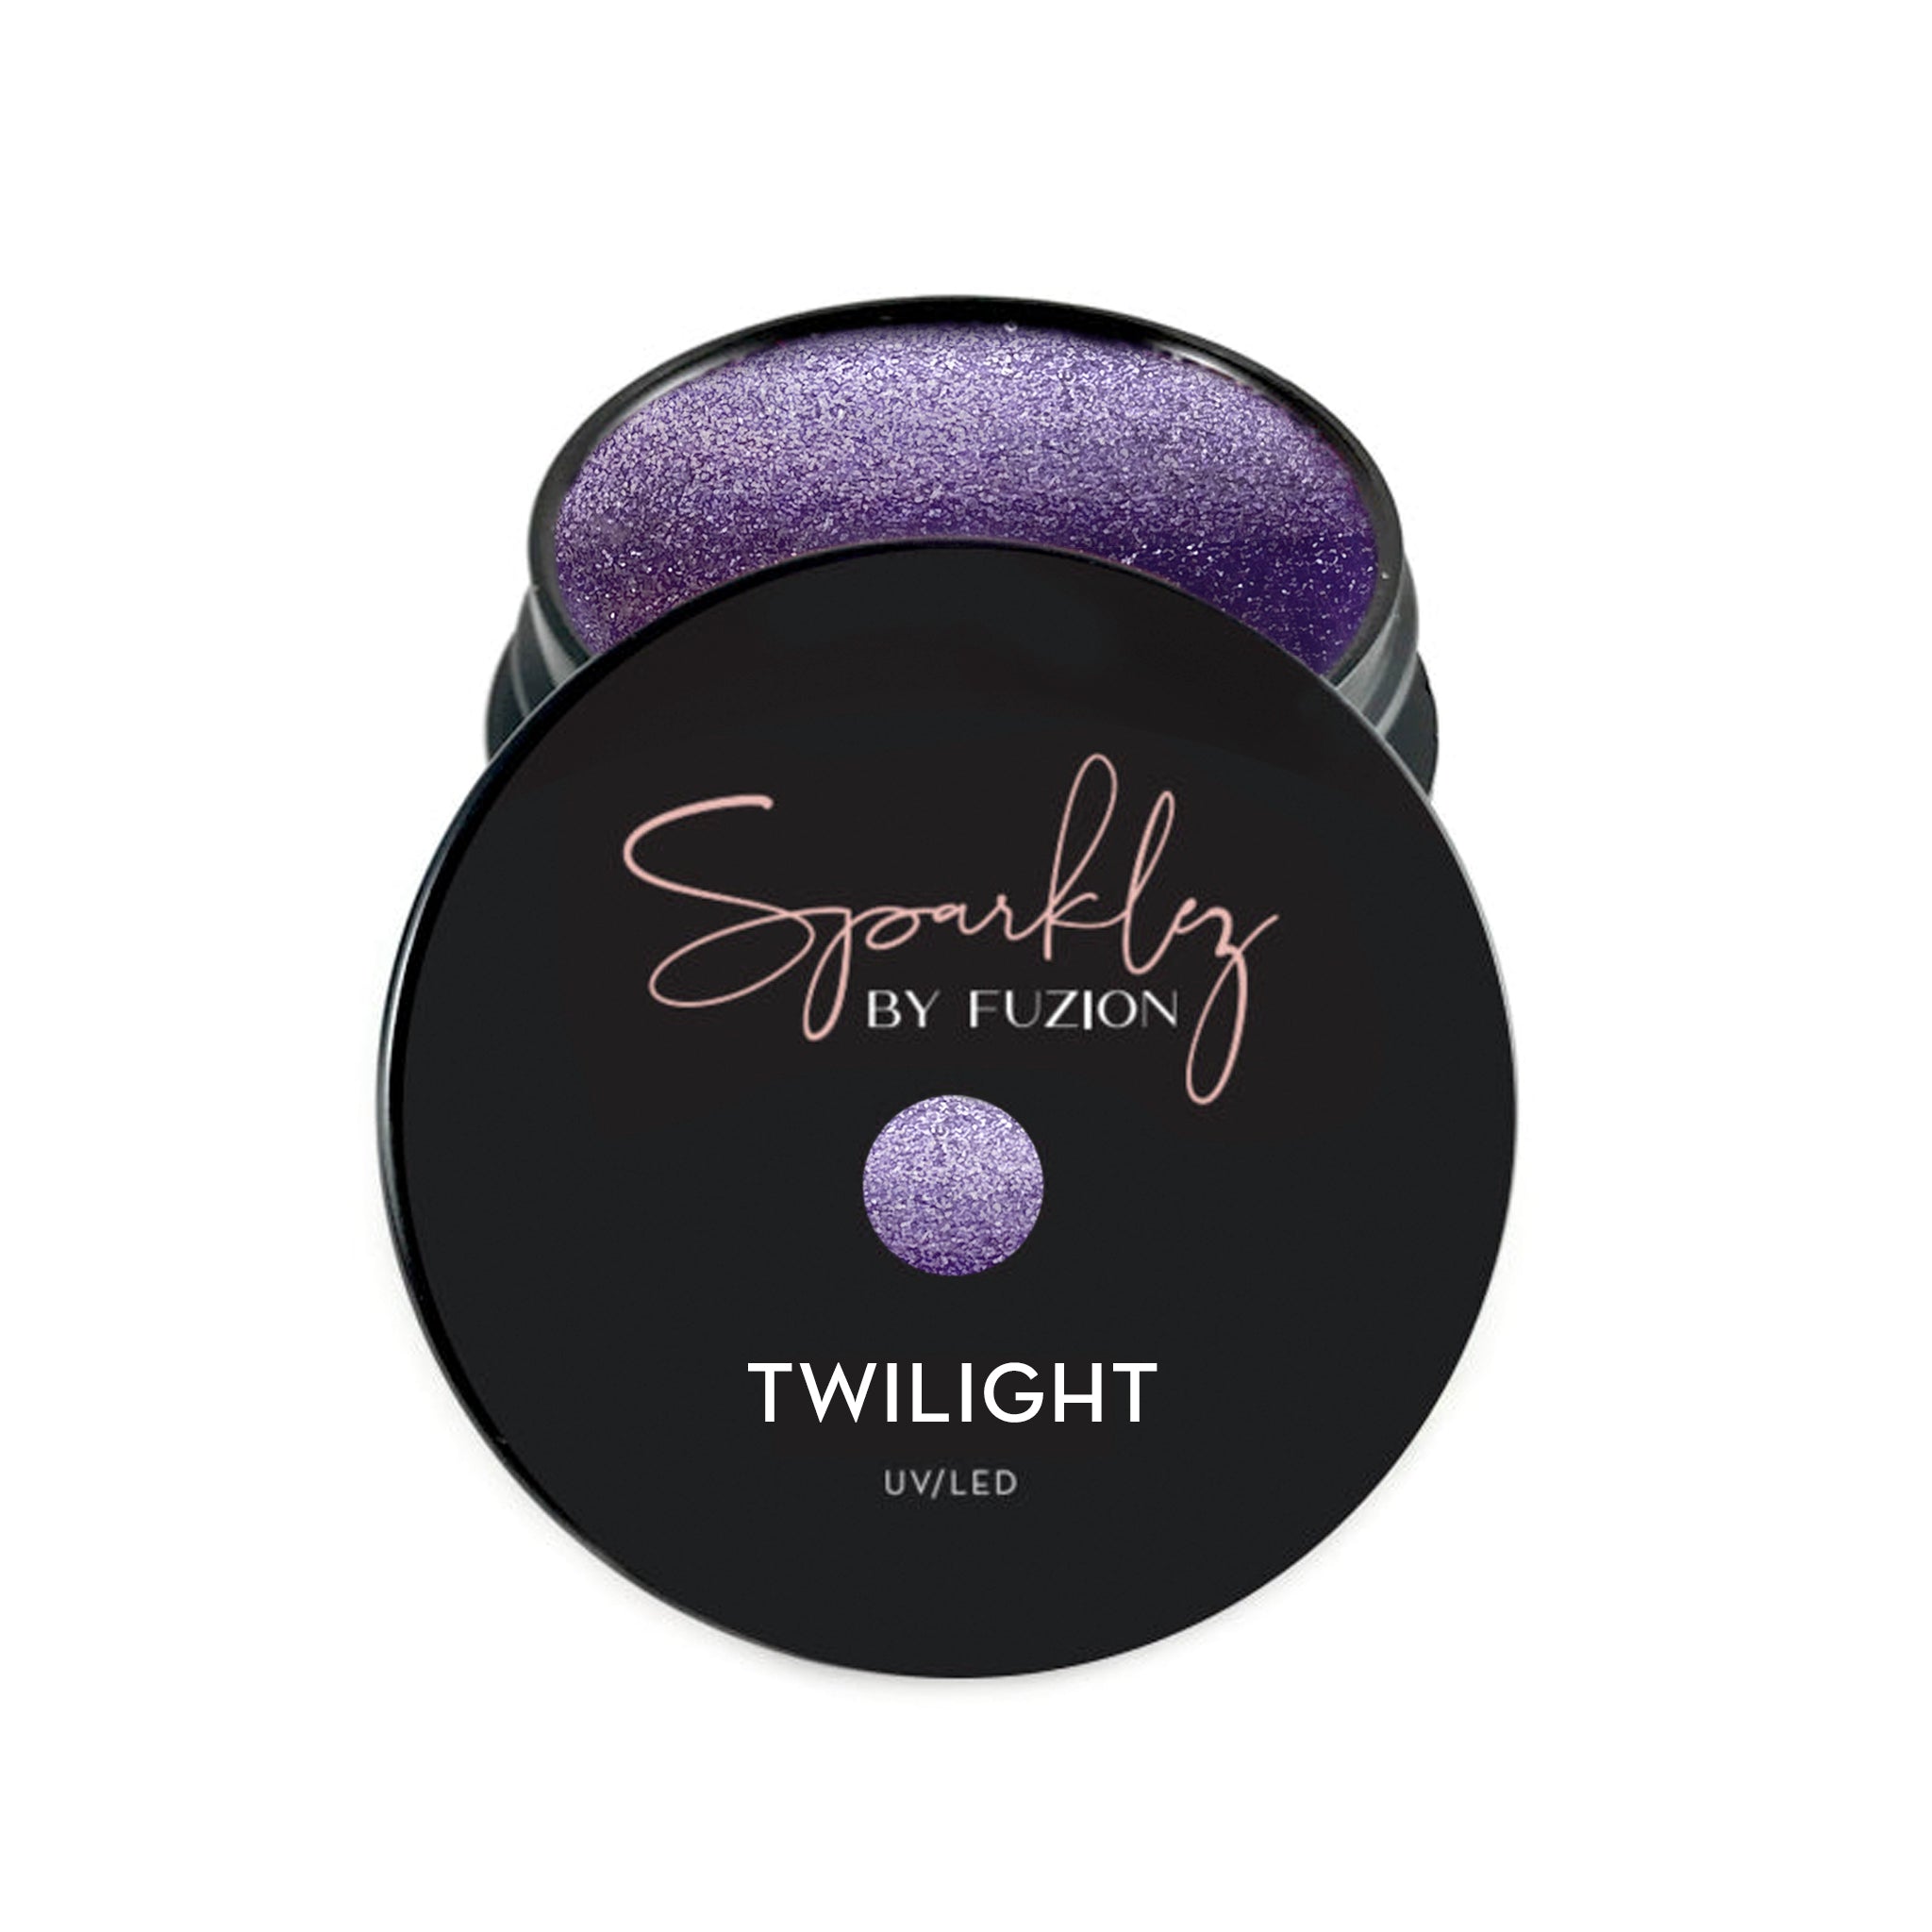 Twilight | Fuzion Sparklez 15gm